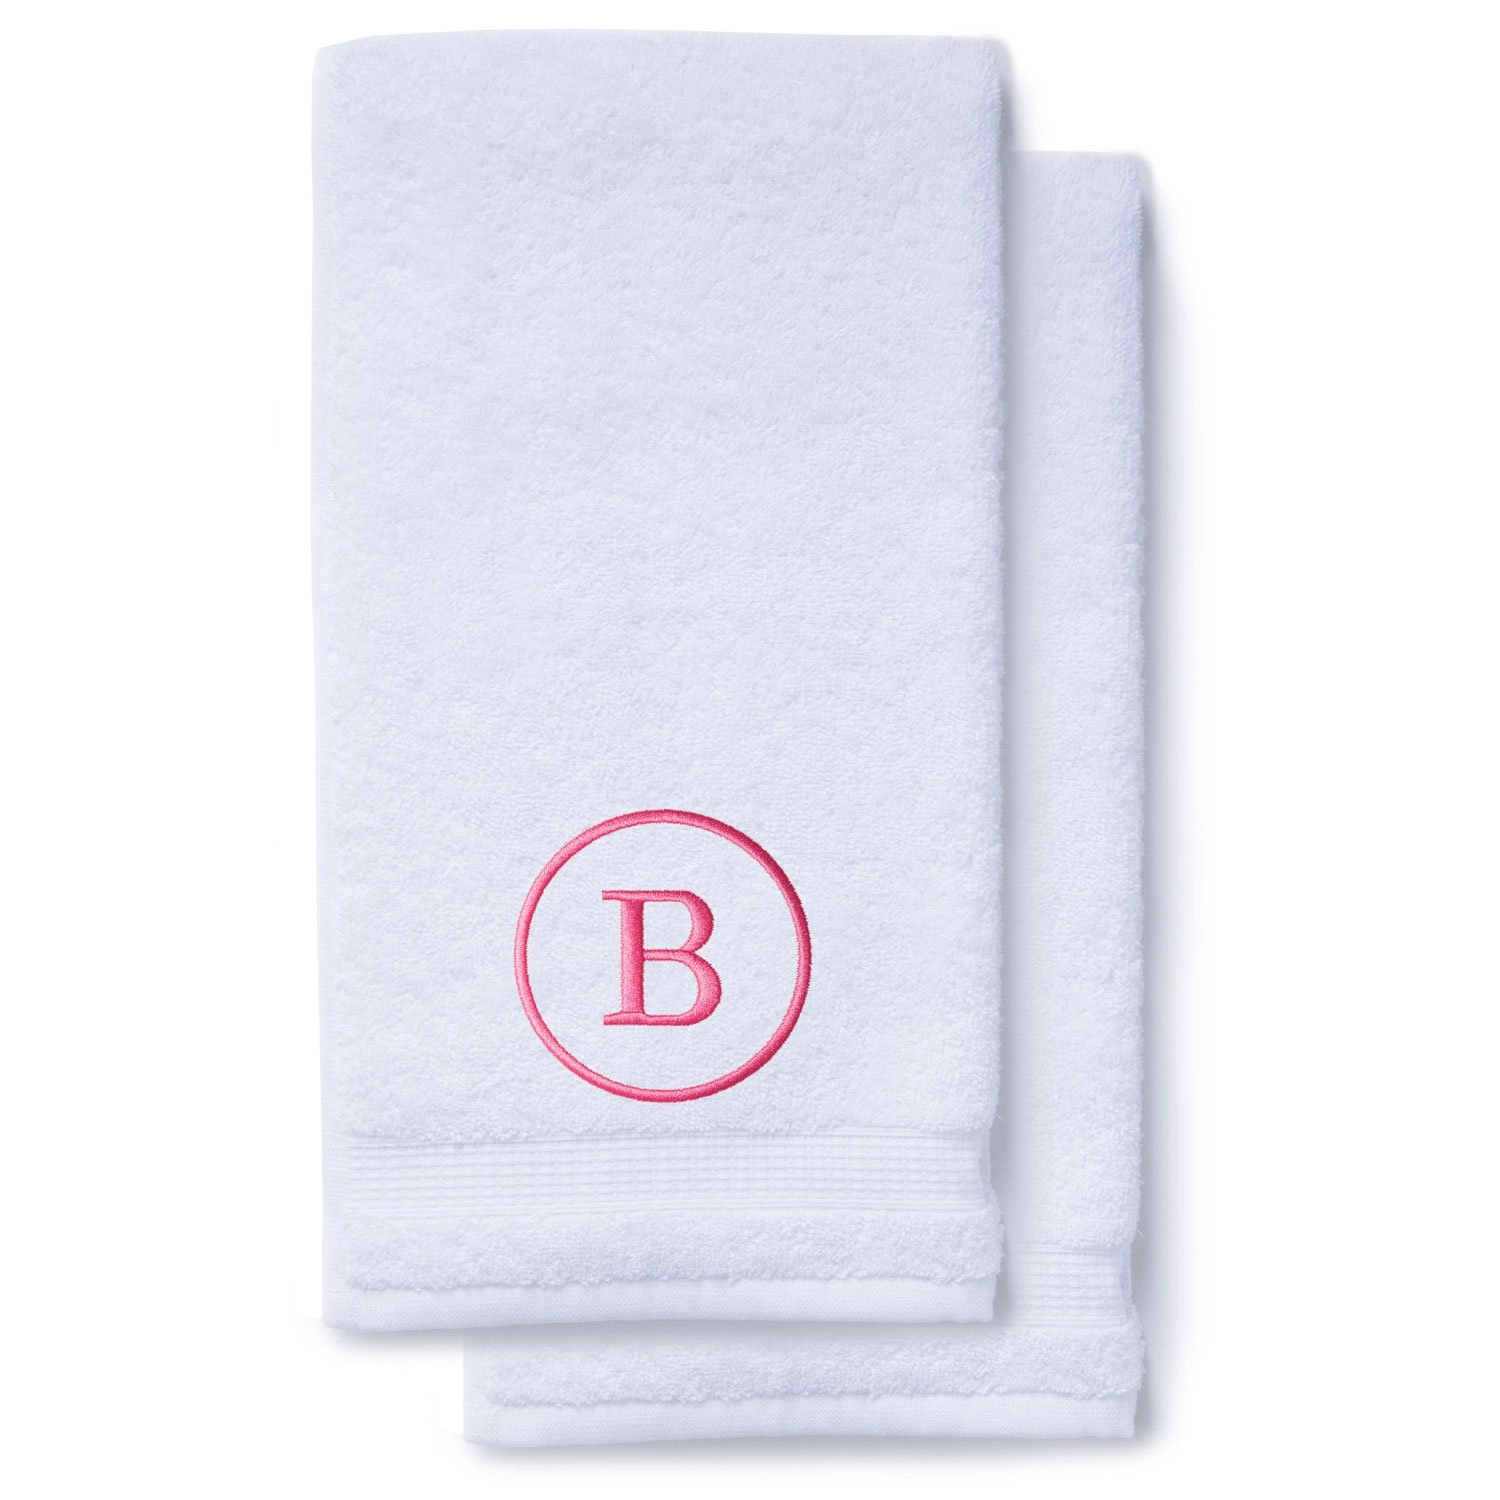 https://robemart.com/images/thumbnails/detailed/7/B-Pink-stacked-Monogrammed-Hand-Towels_fl4r-gb.webp